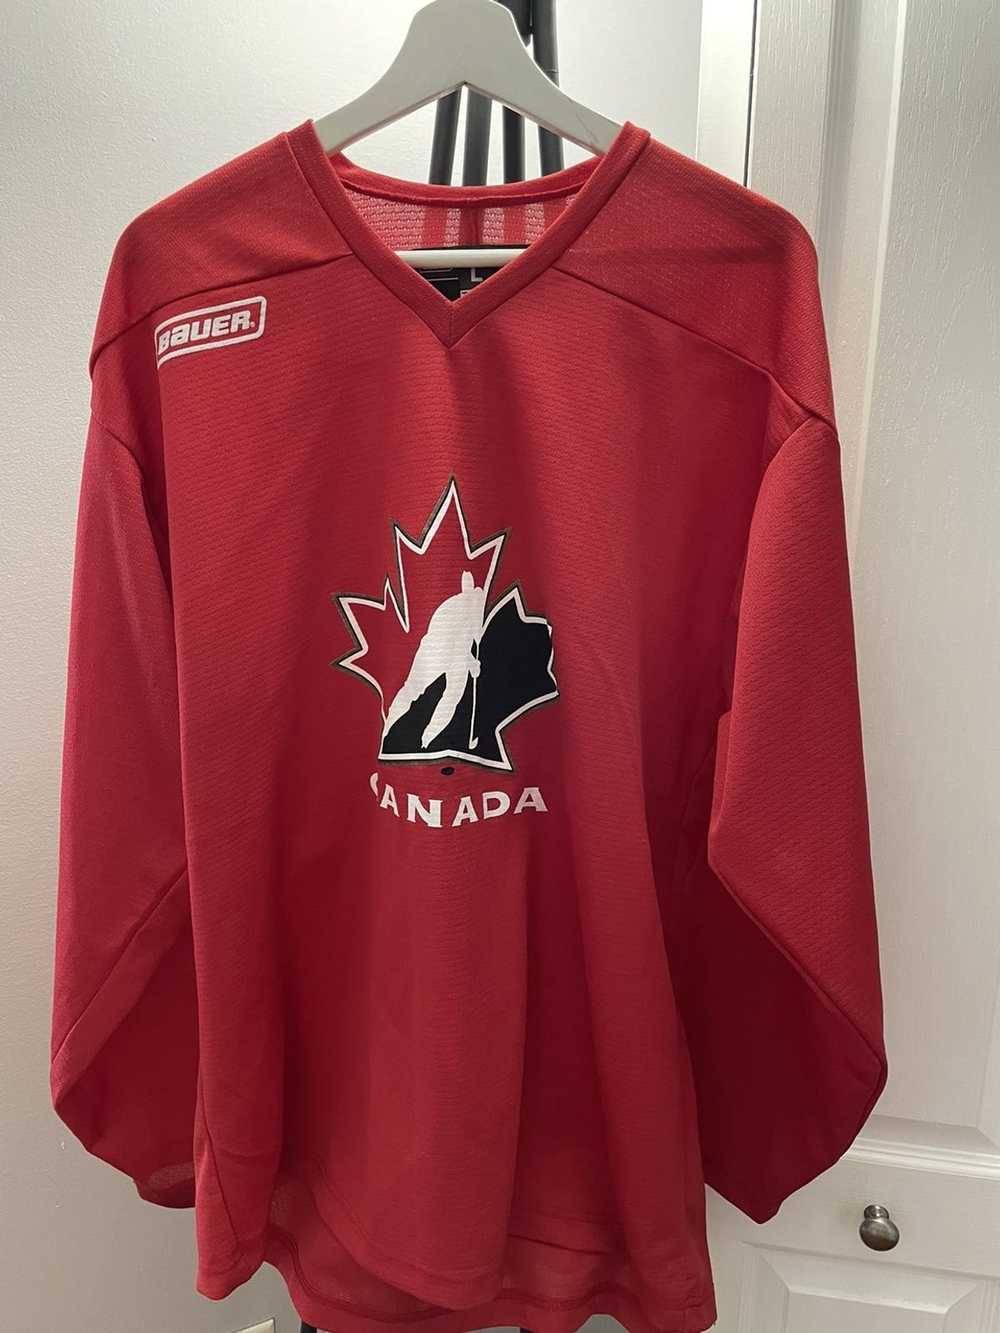 NIKE Team Canada Nike Infant Hockey Jersey